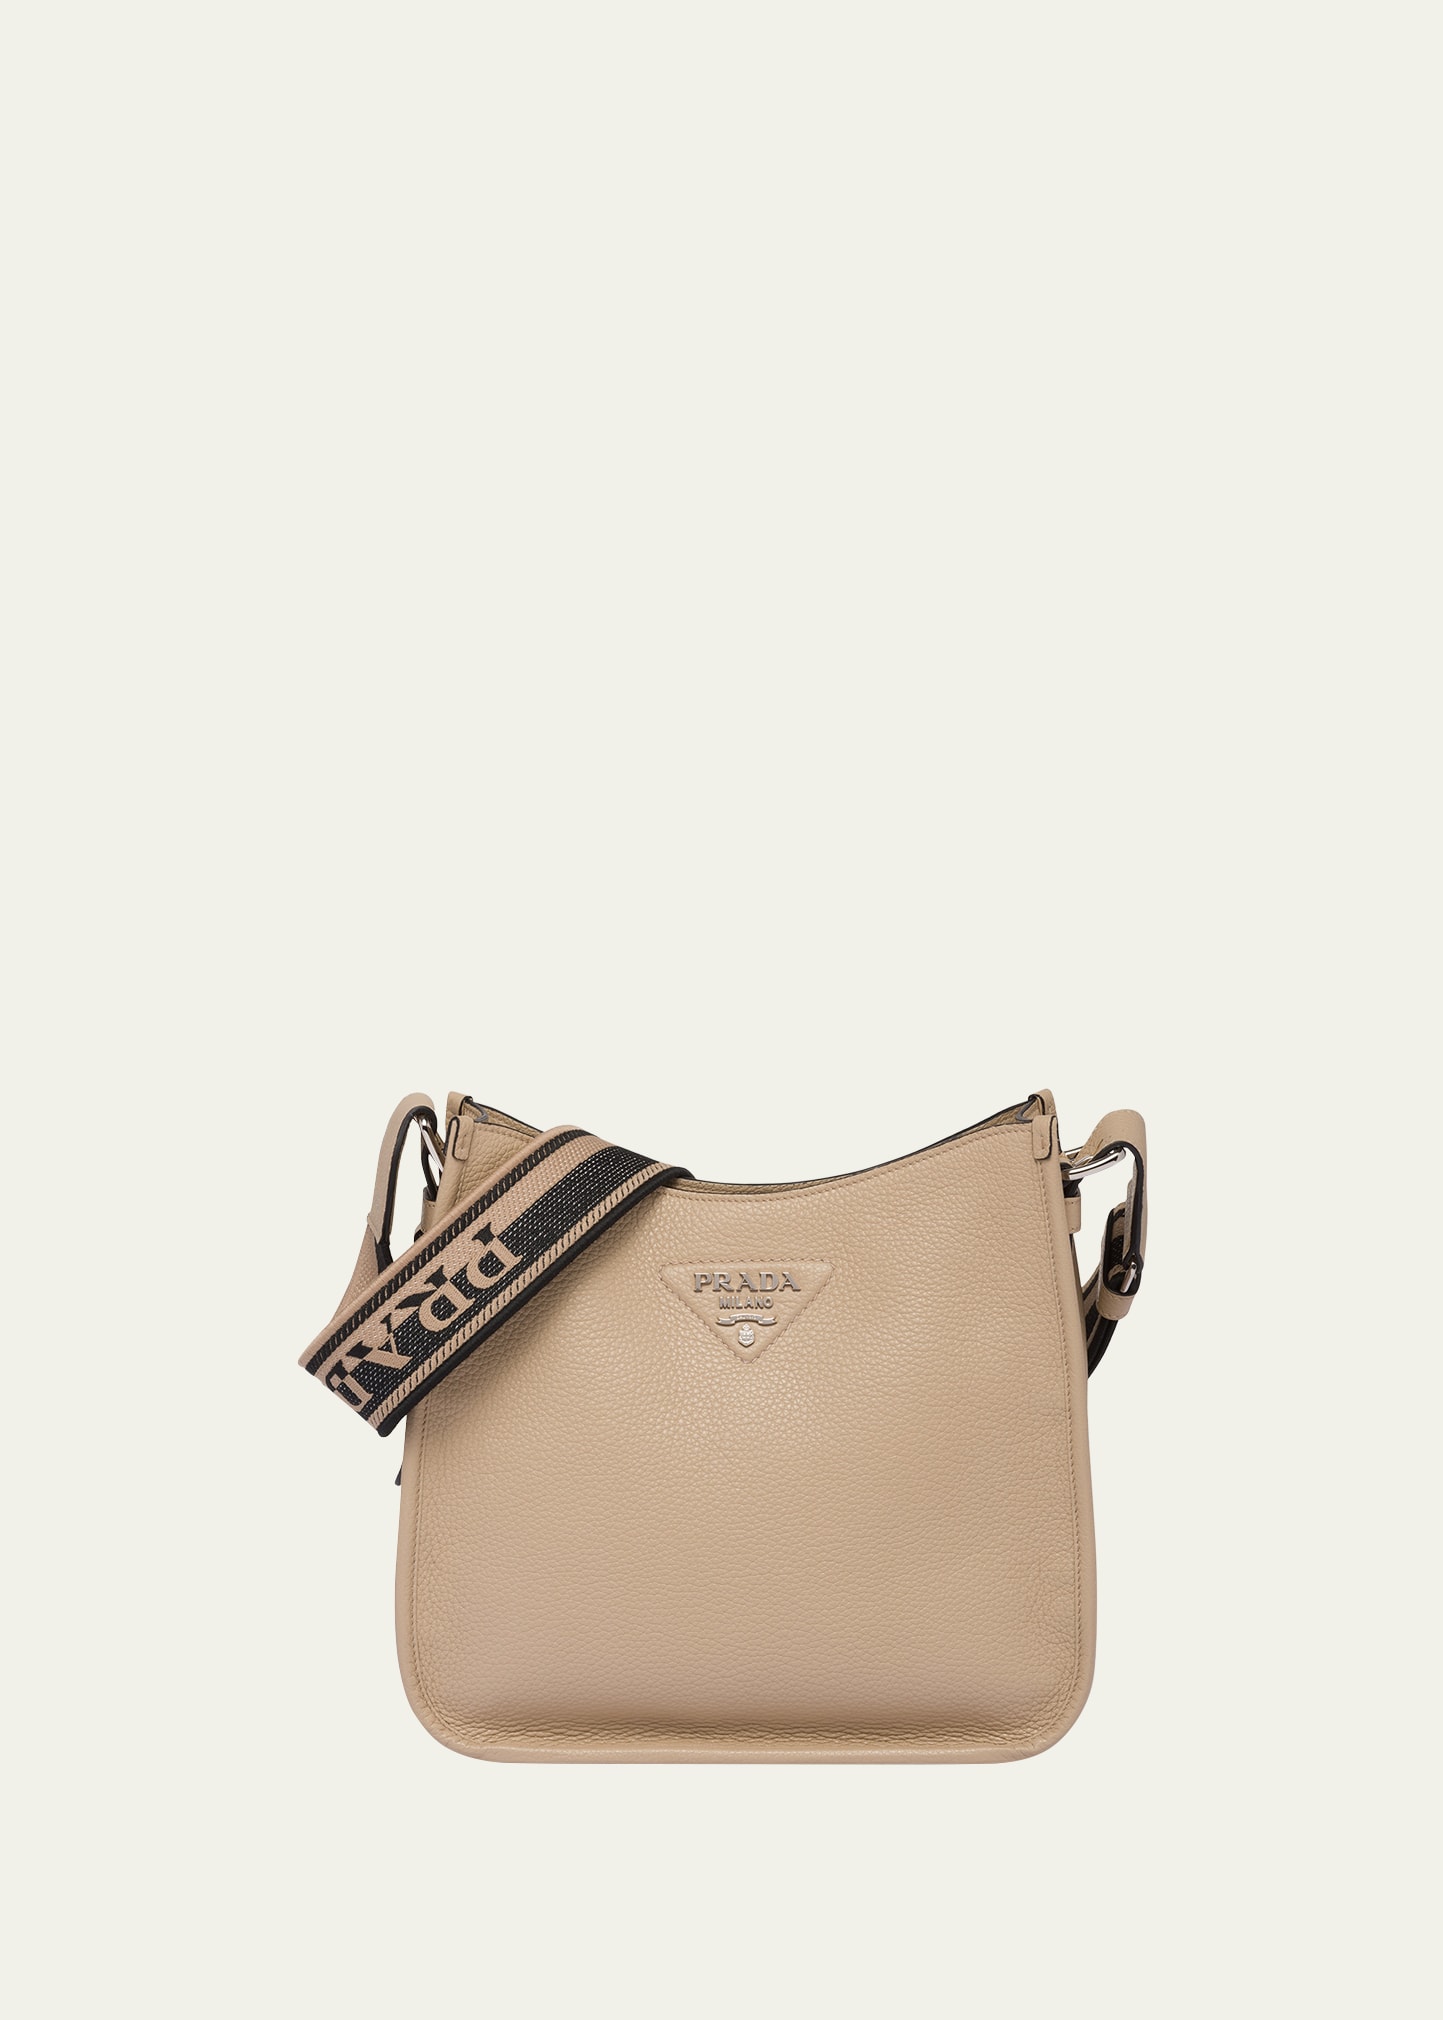 Prada Daino Leather Shoulder Bag In F0572 Argilla